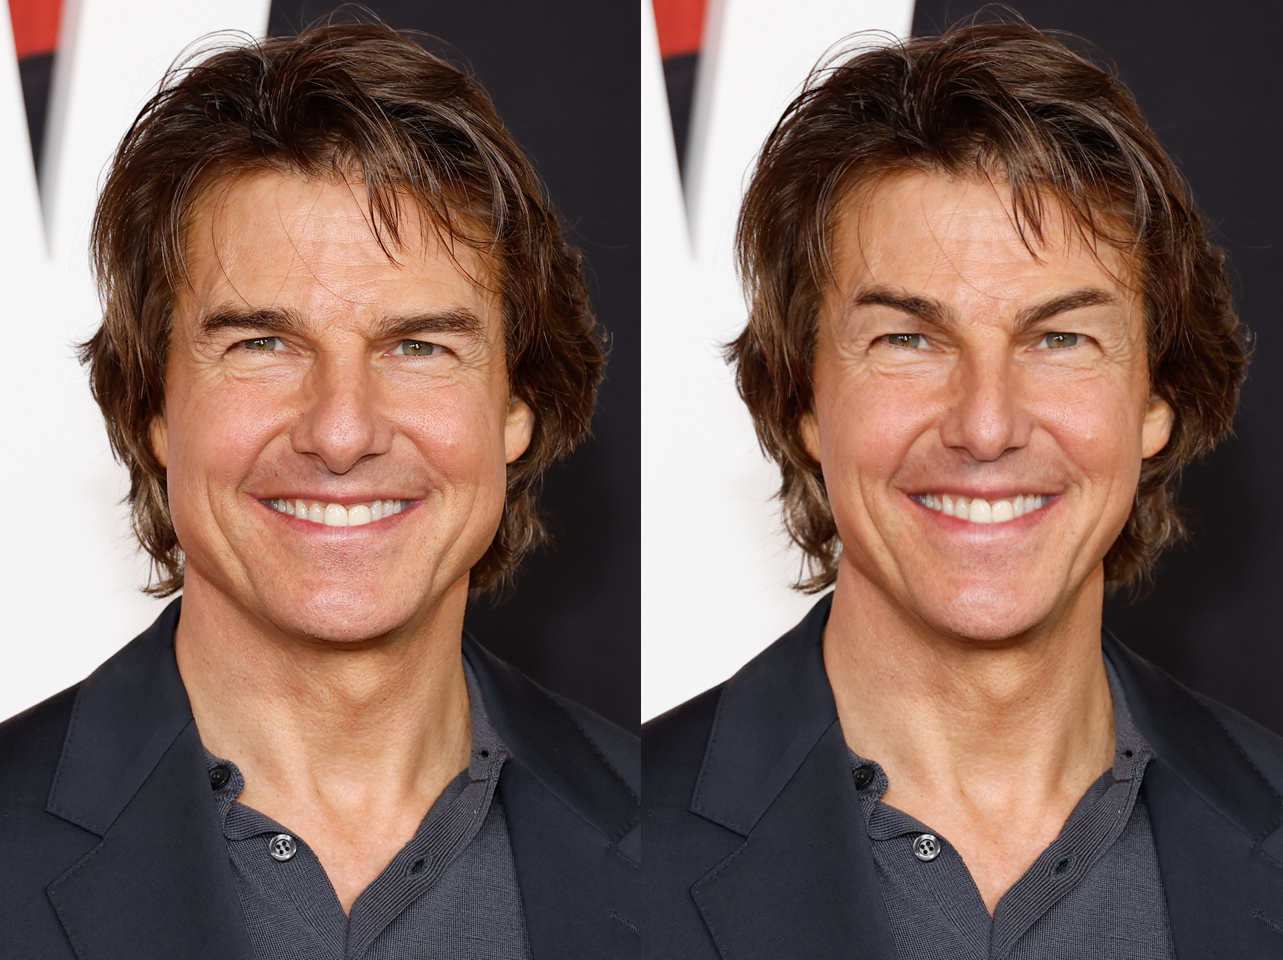 El verdadero Tom Cruise frente a su yo ideal | Fuente: Getty Images